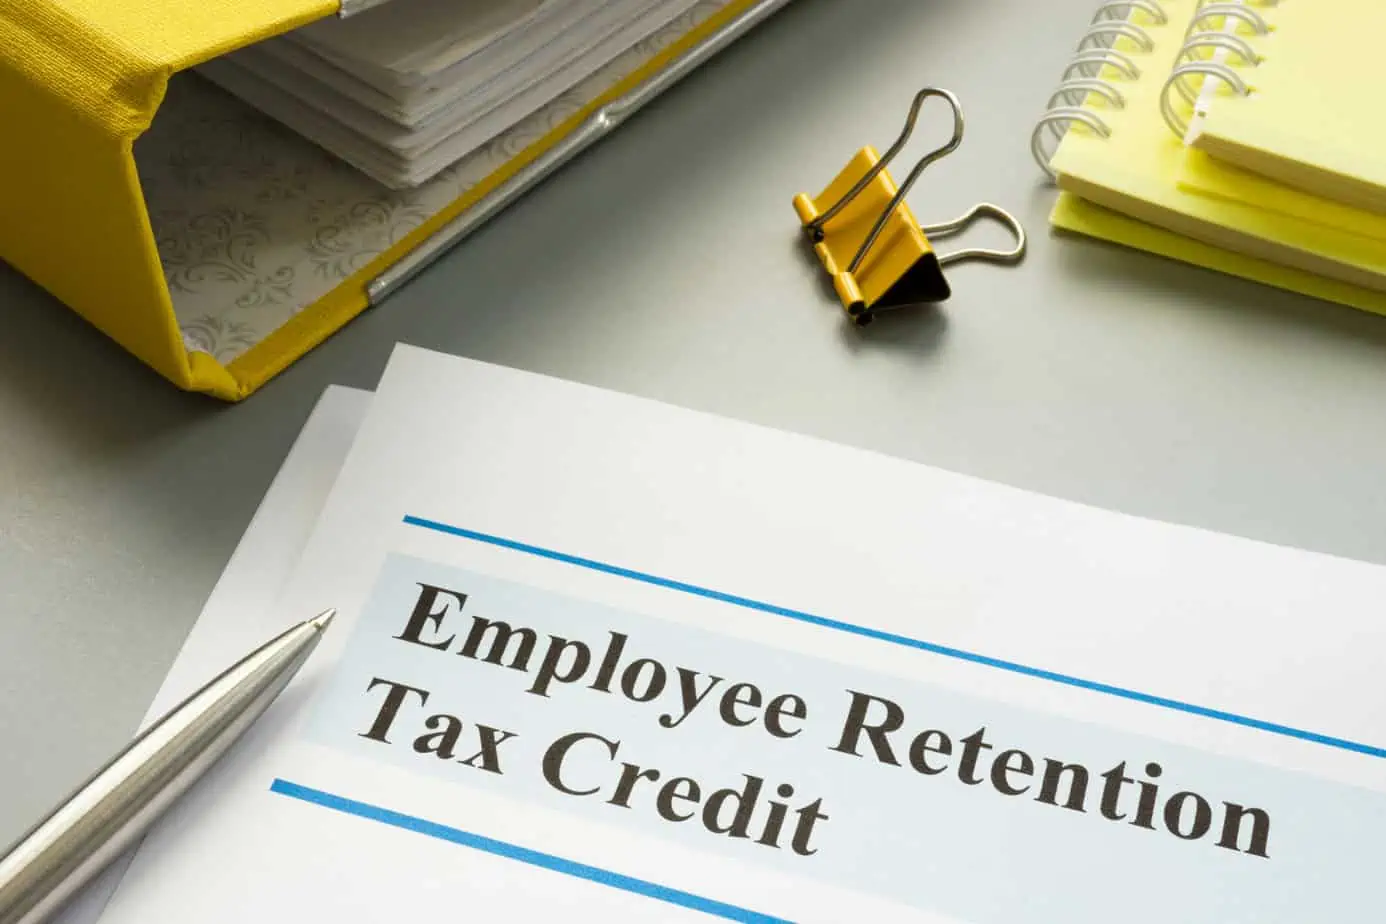 employee retention tax credit faq